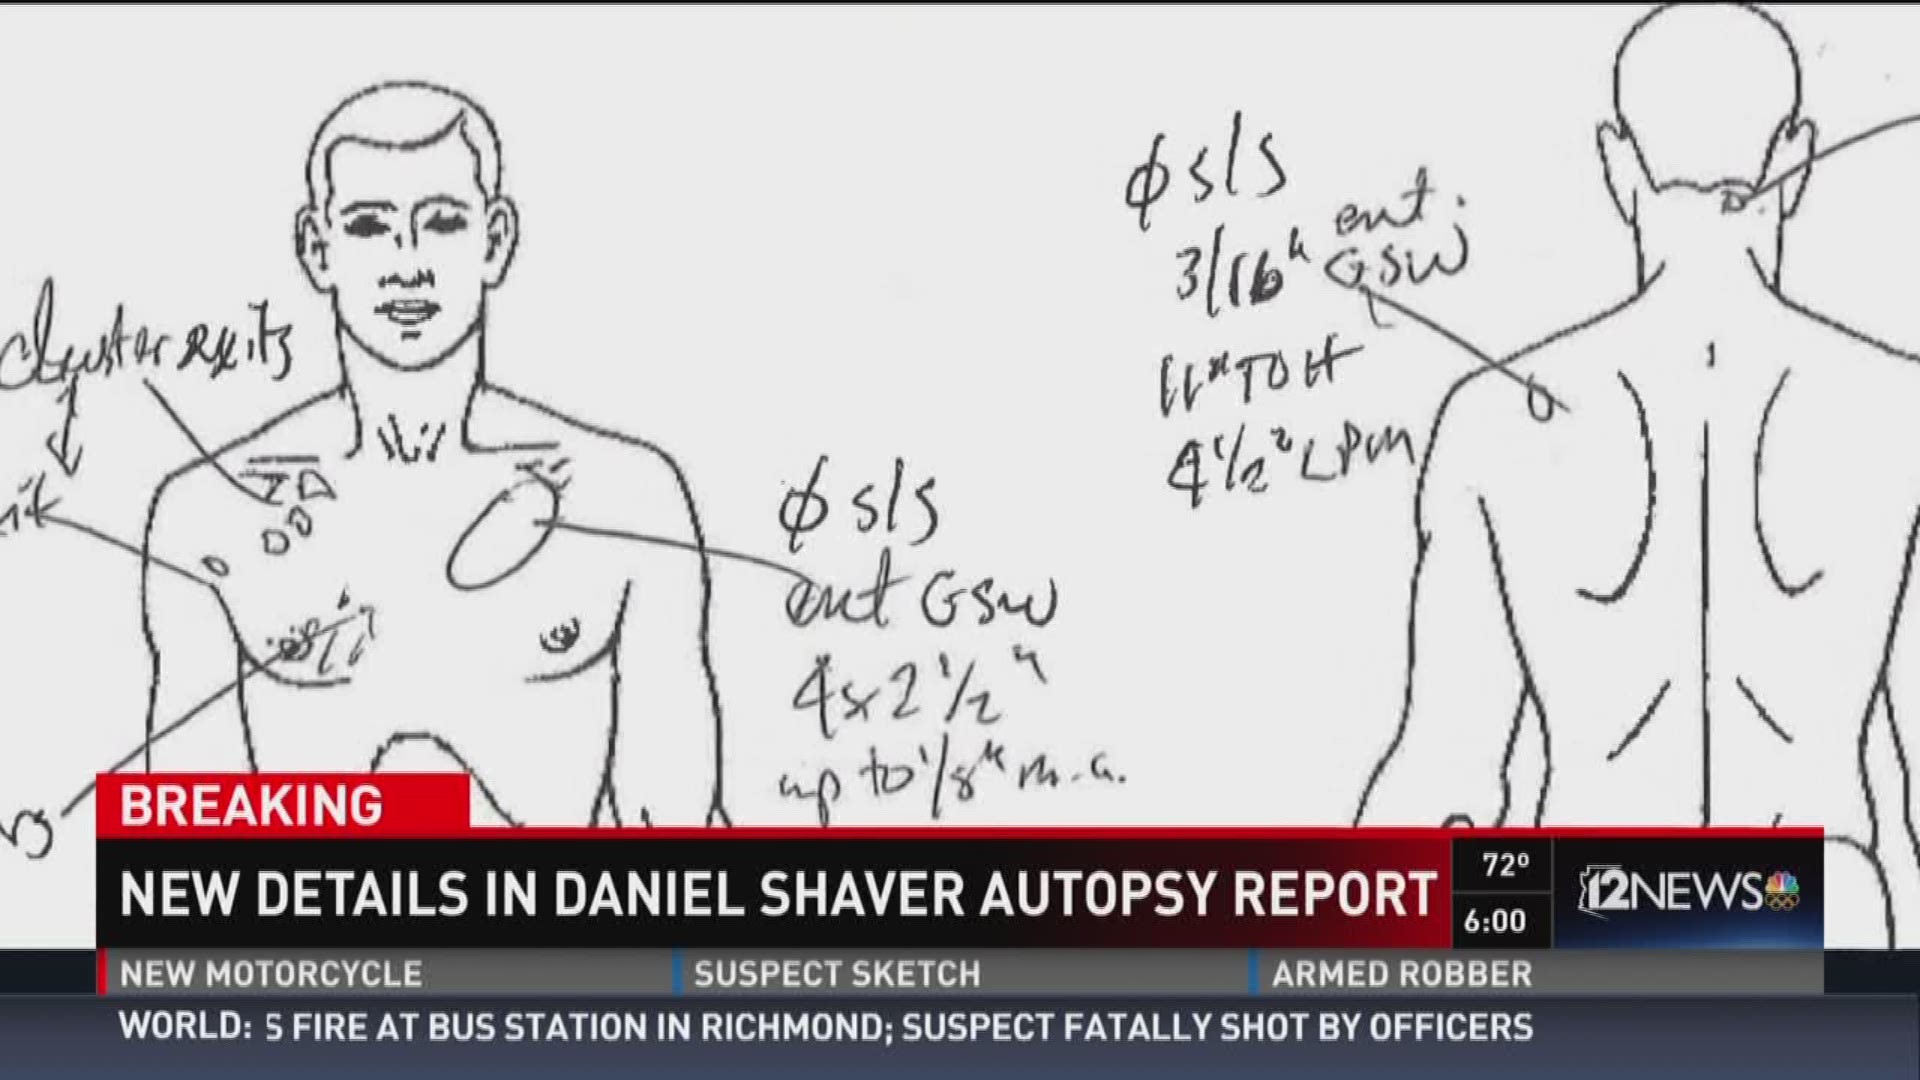 New details in Daniel Shaver autopsy report